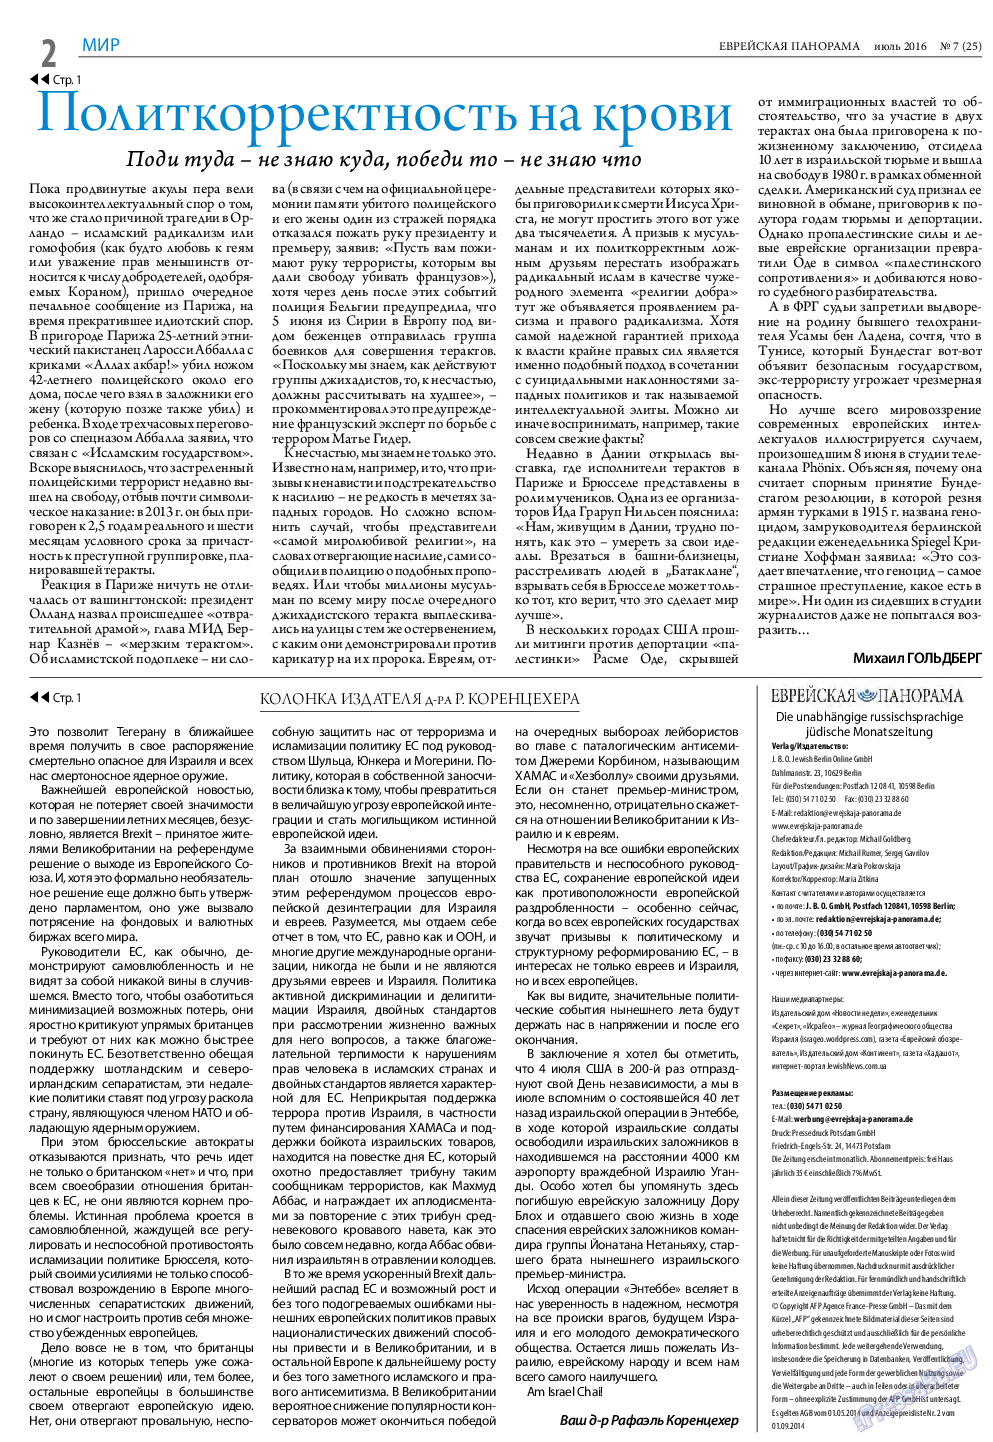 Еврейская панорама, газета. 2016 №7 стр.2